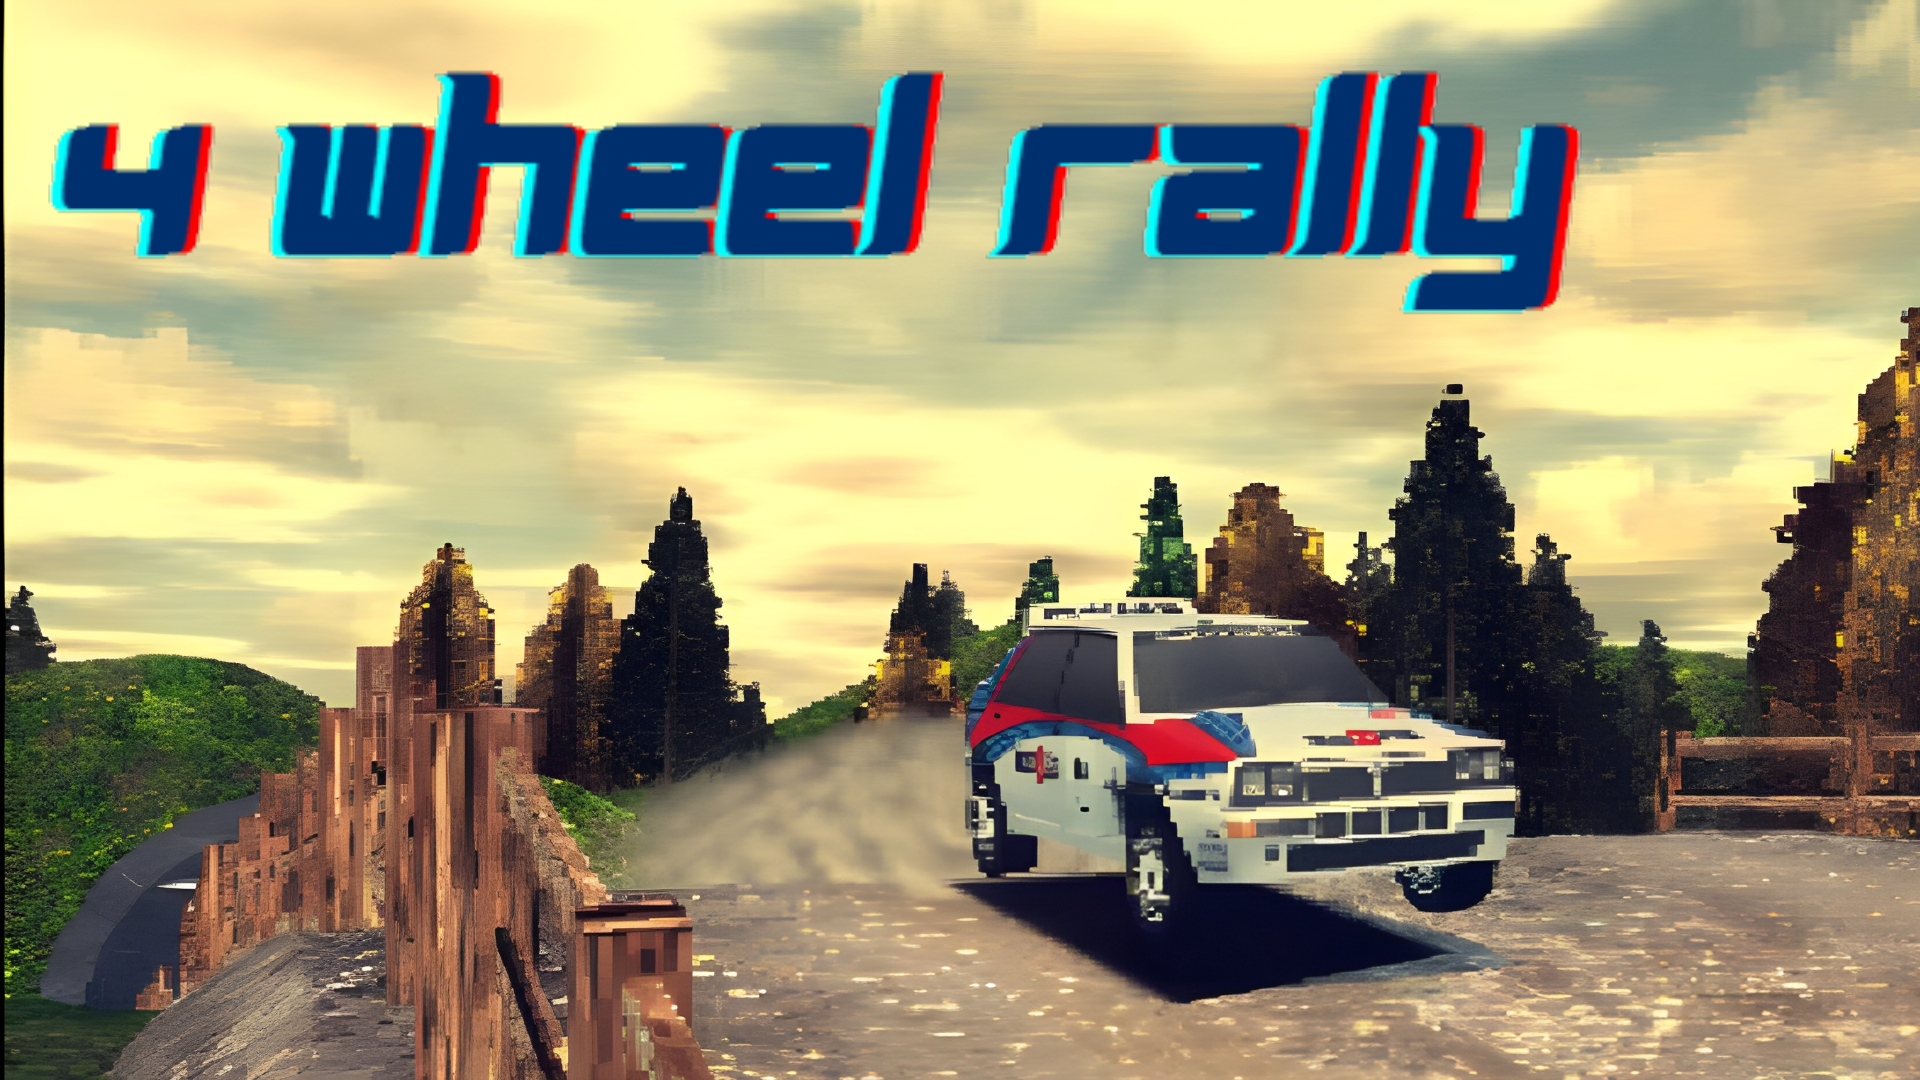 4 Wheel Rally